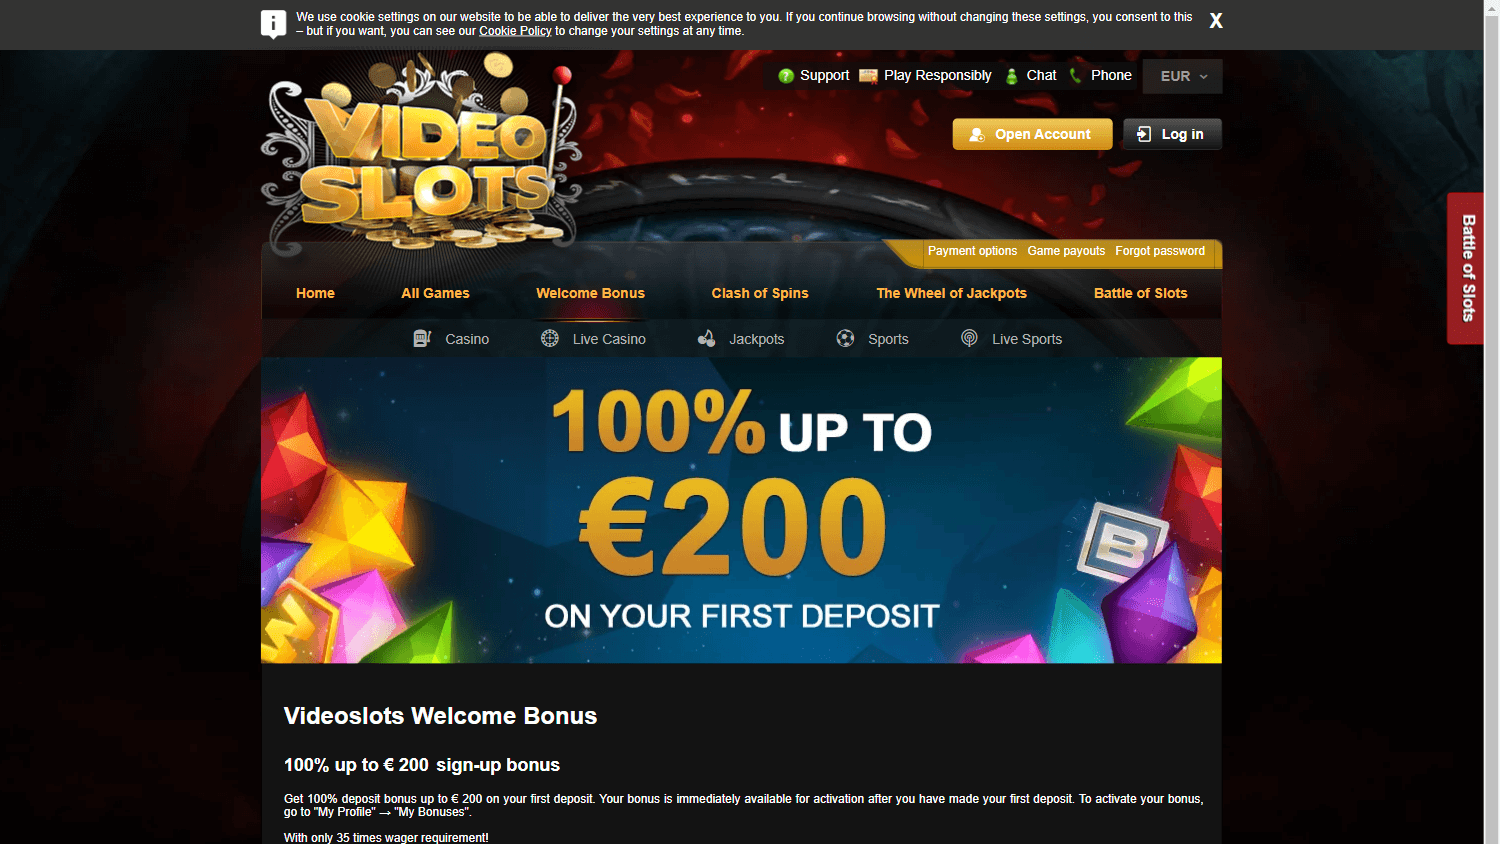 videoslots_casino_promotions_desktop